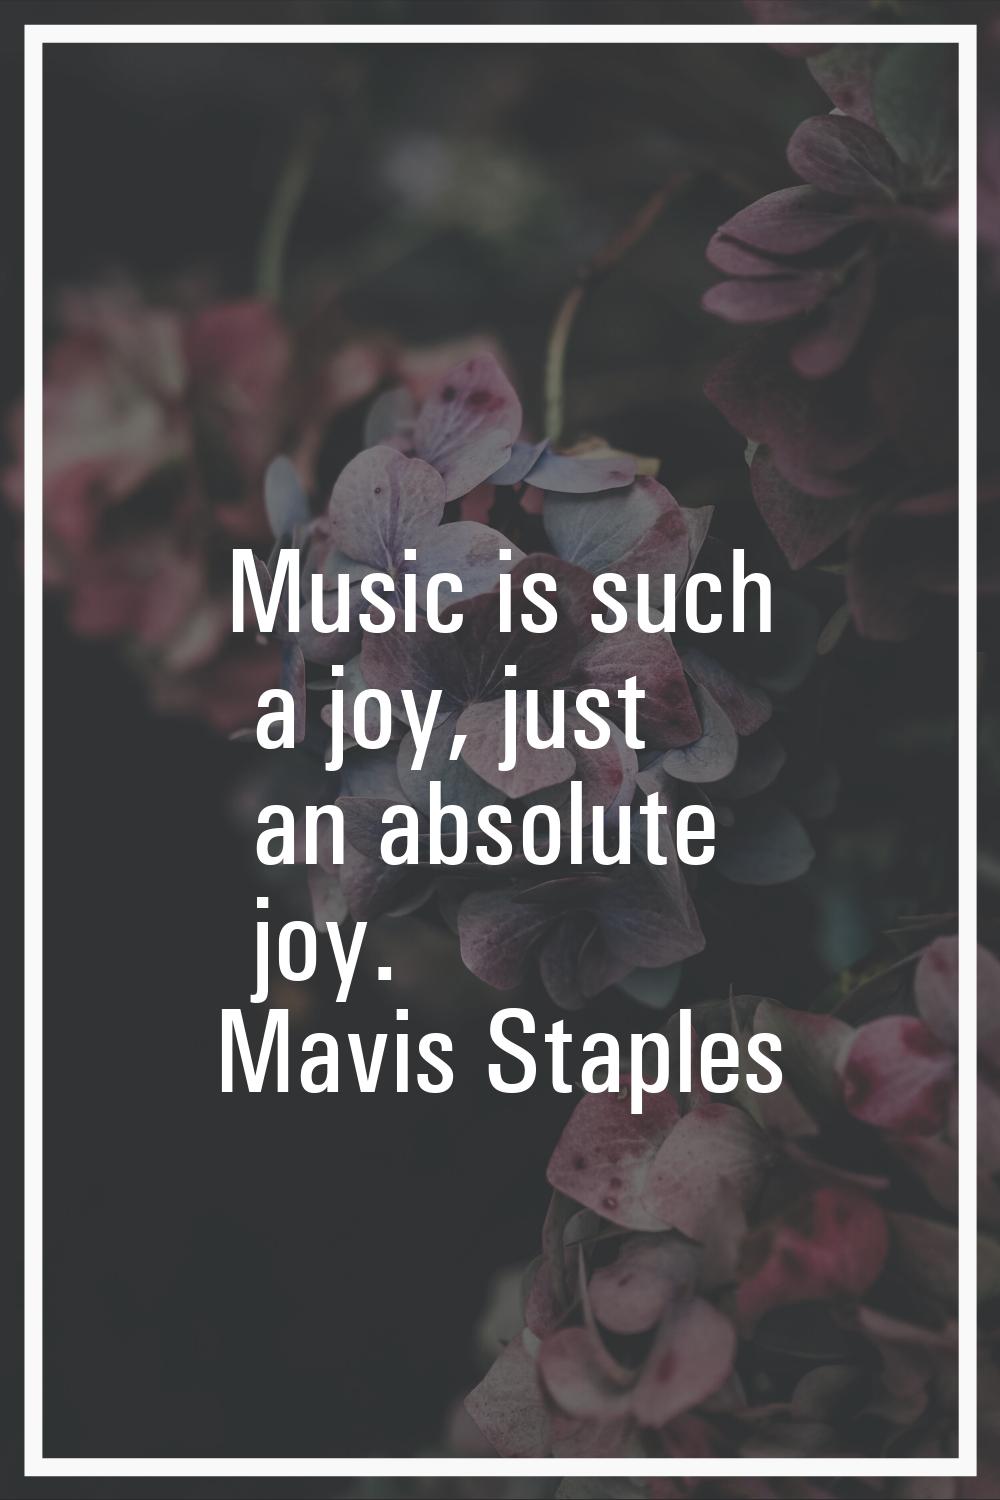 Music is such a joy, just an absolute joy.